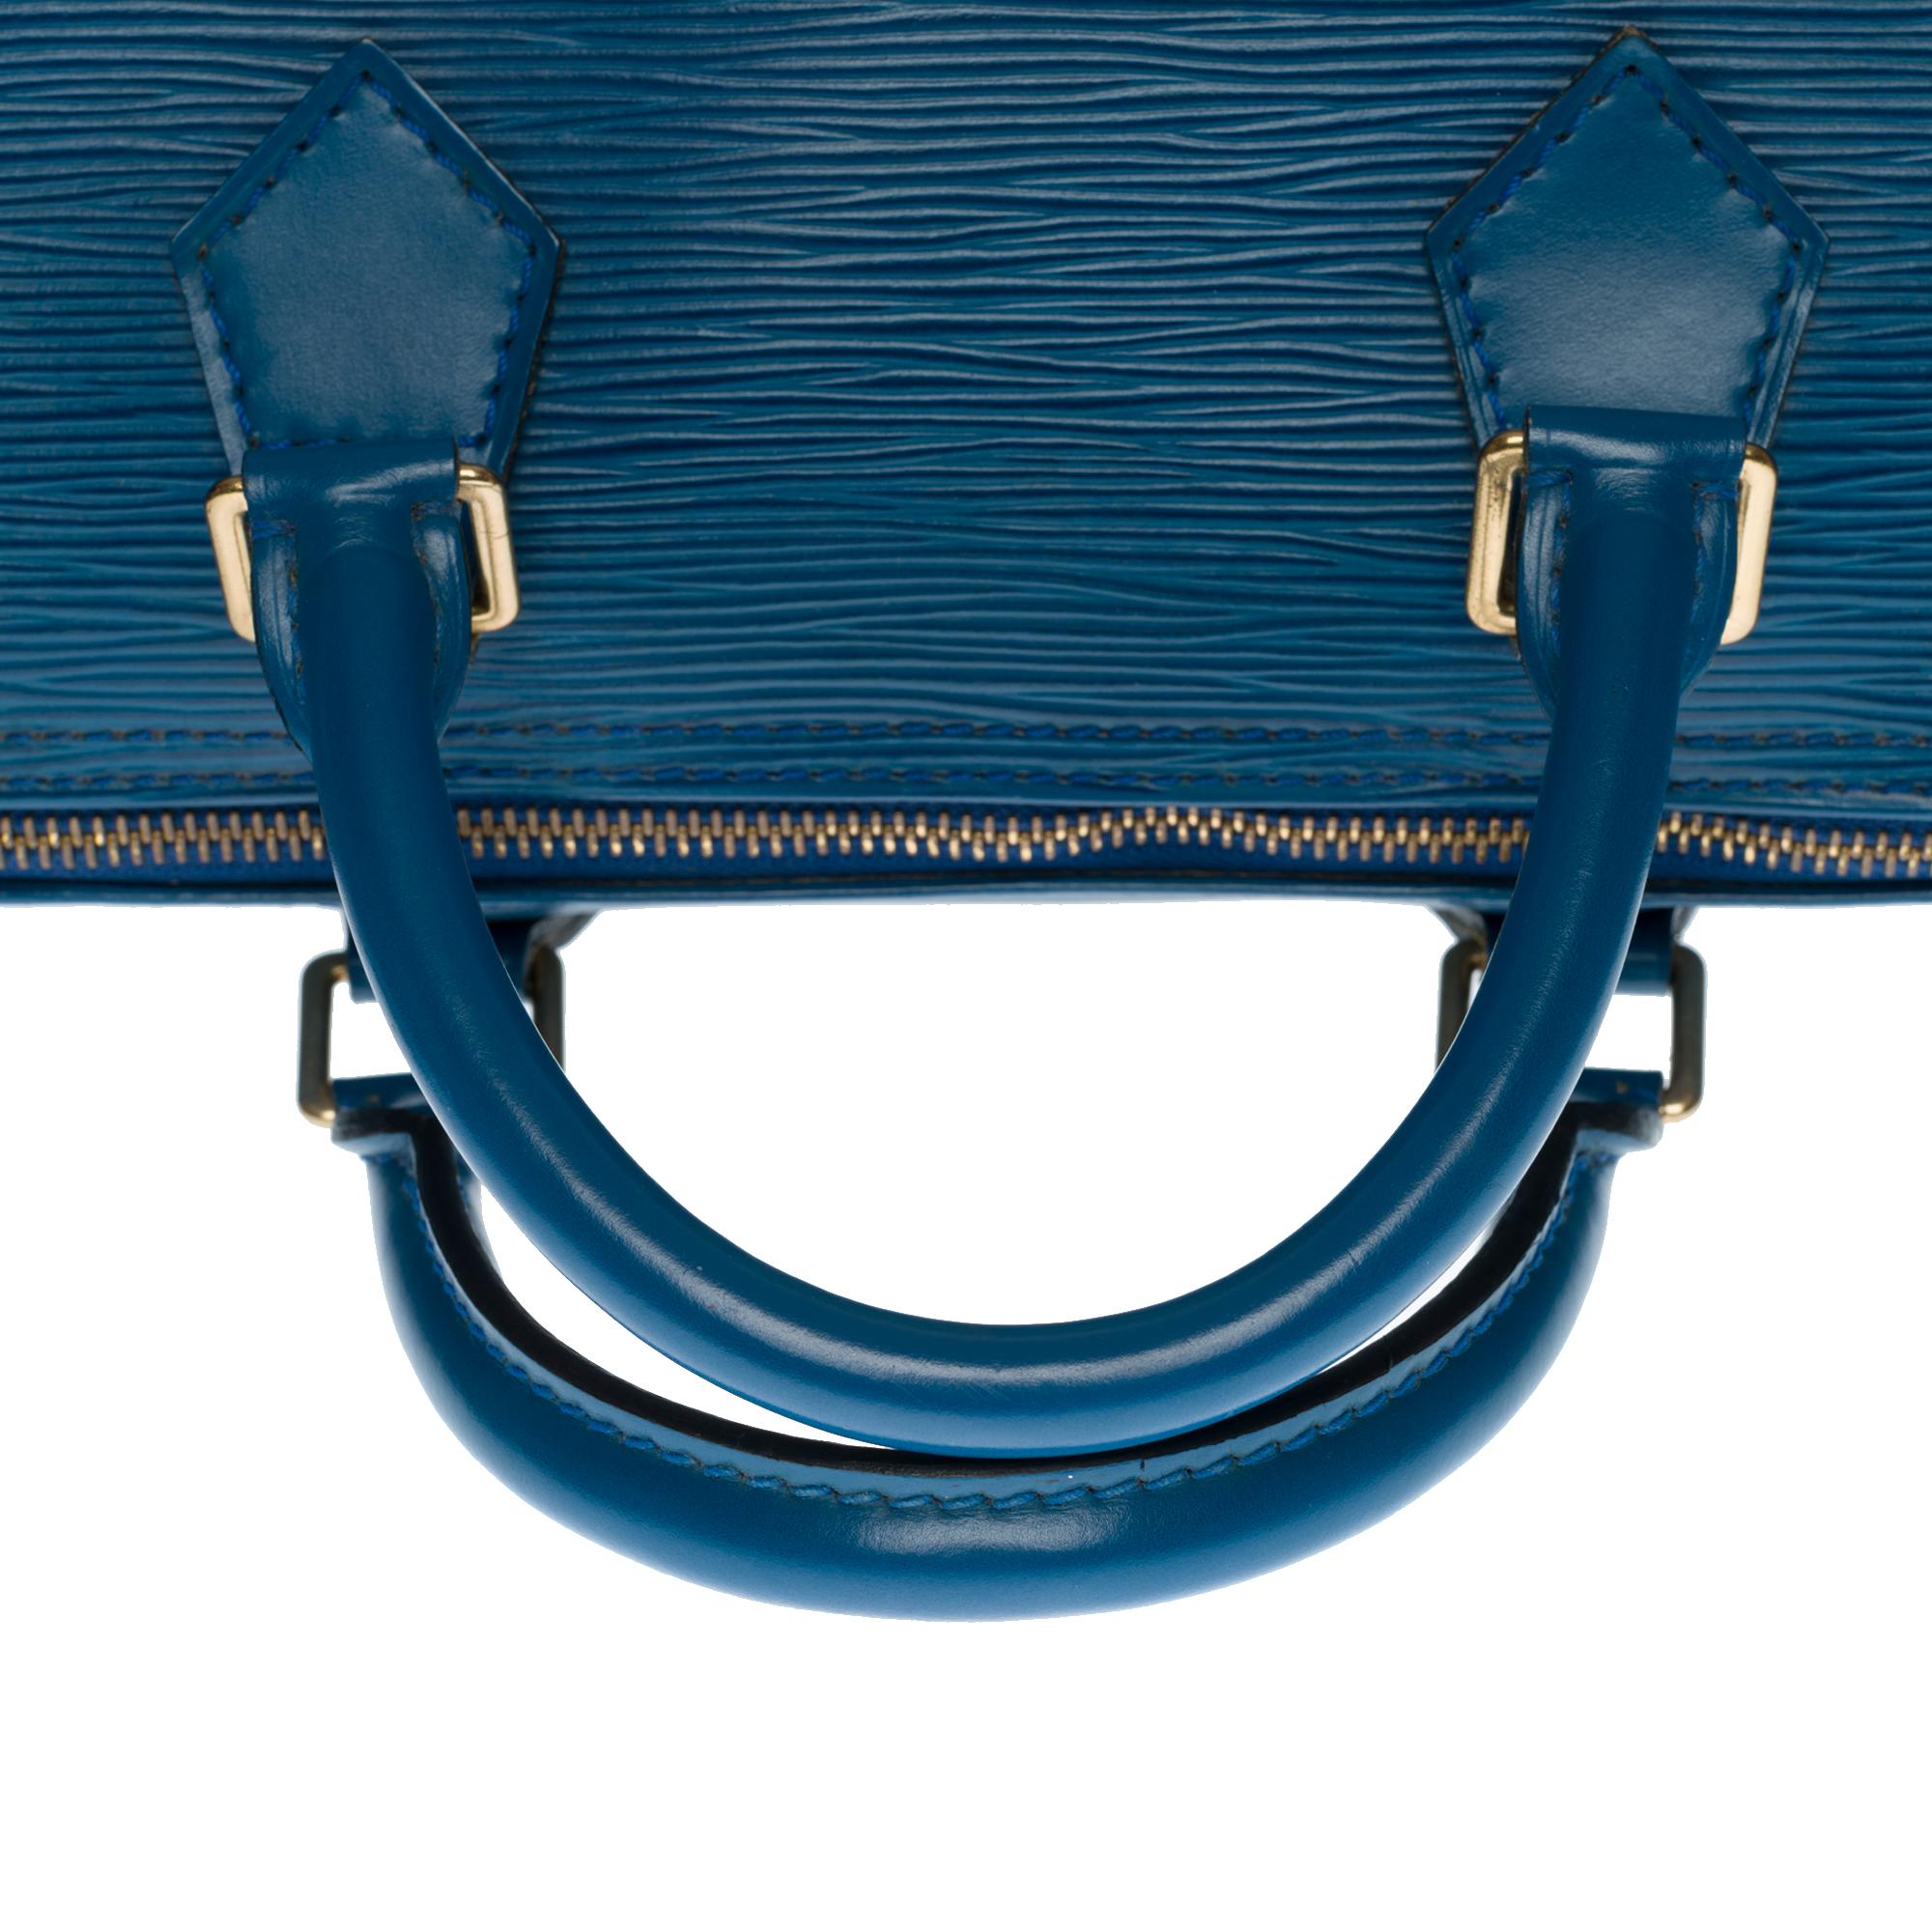 Women's or Men's Louis Vuitton Speedy 30 handbag in blue cobalt épi leather and gold hardware